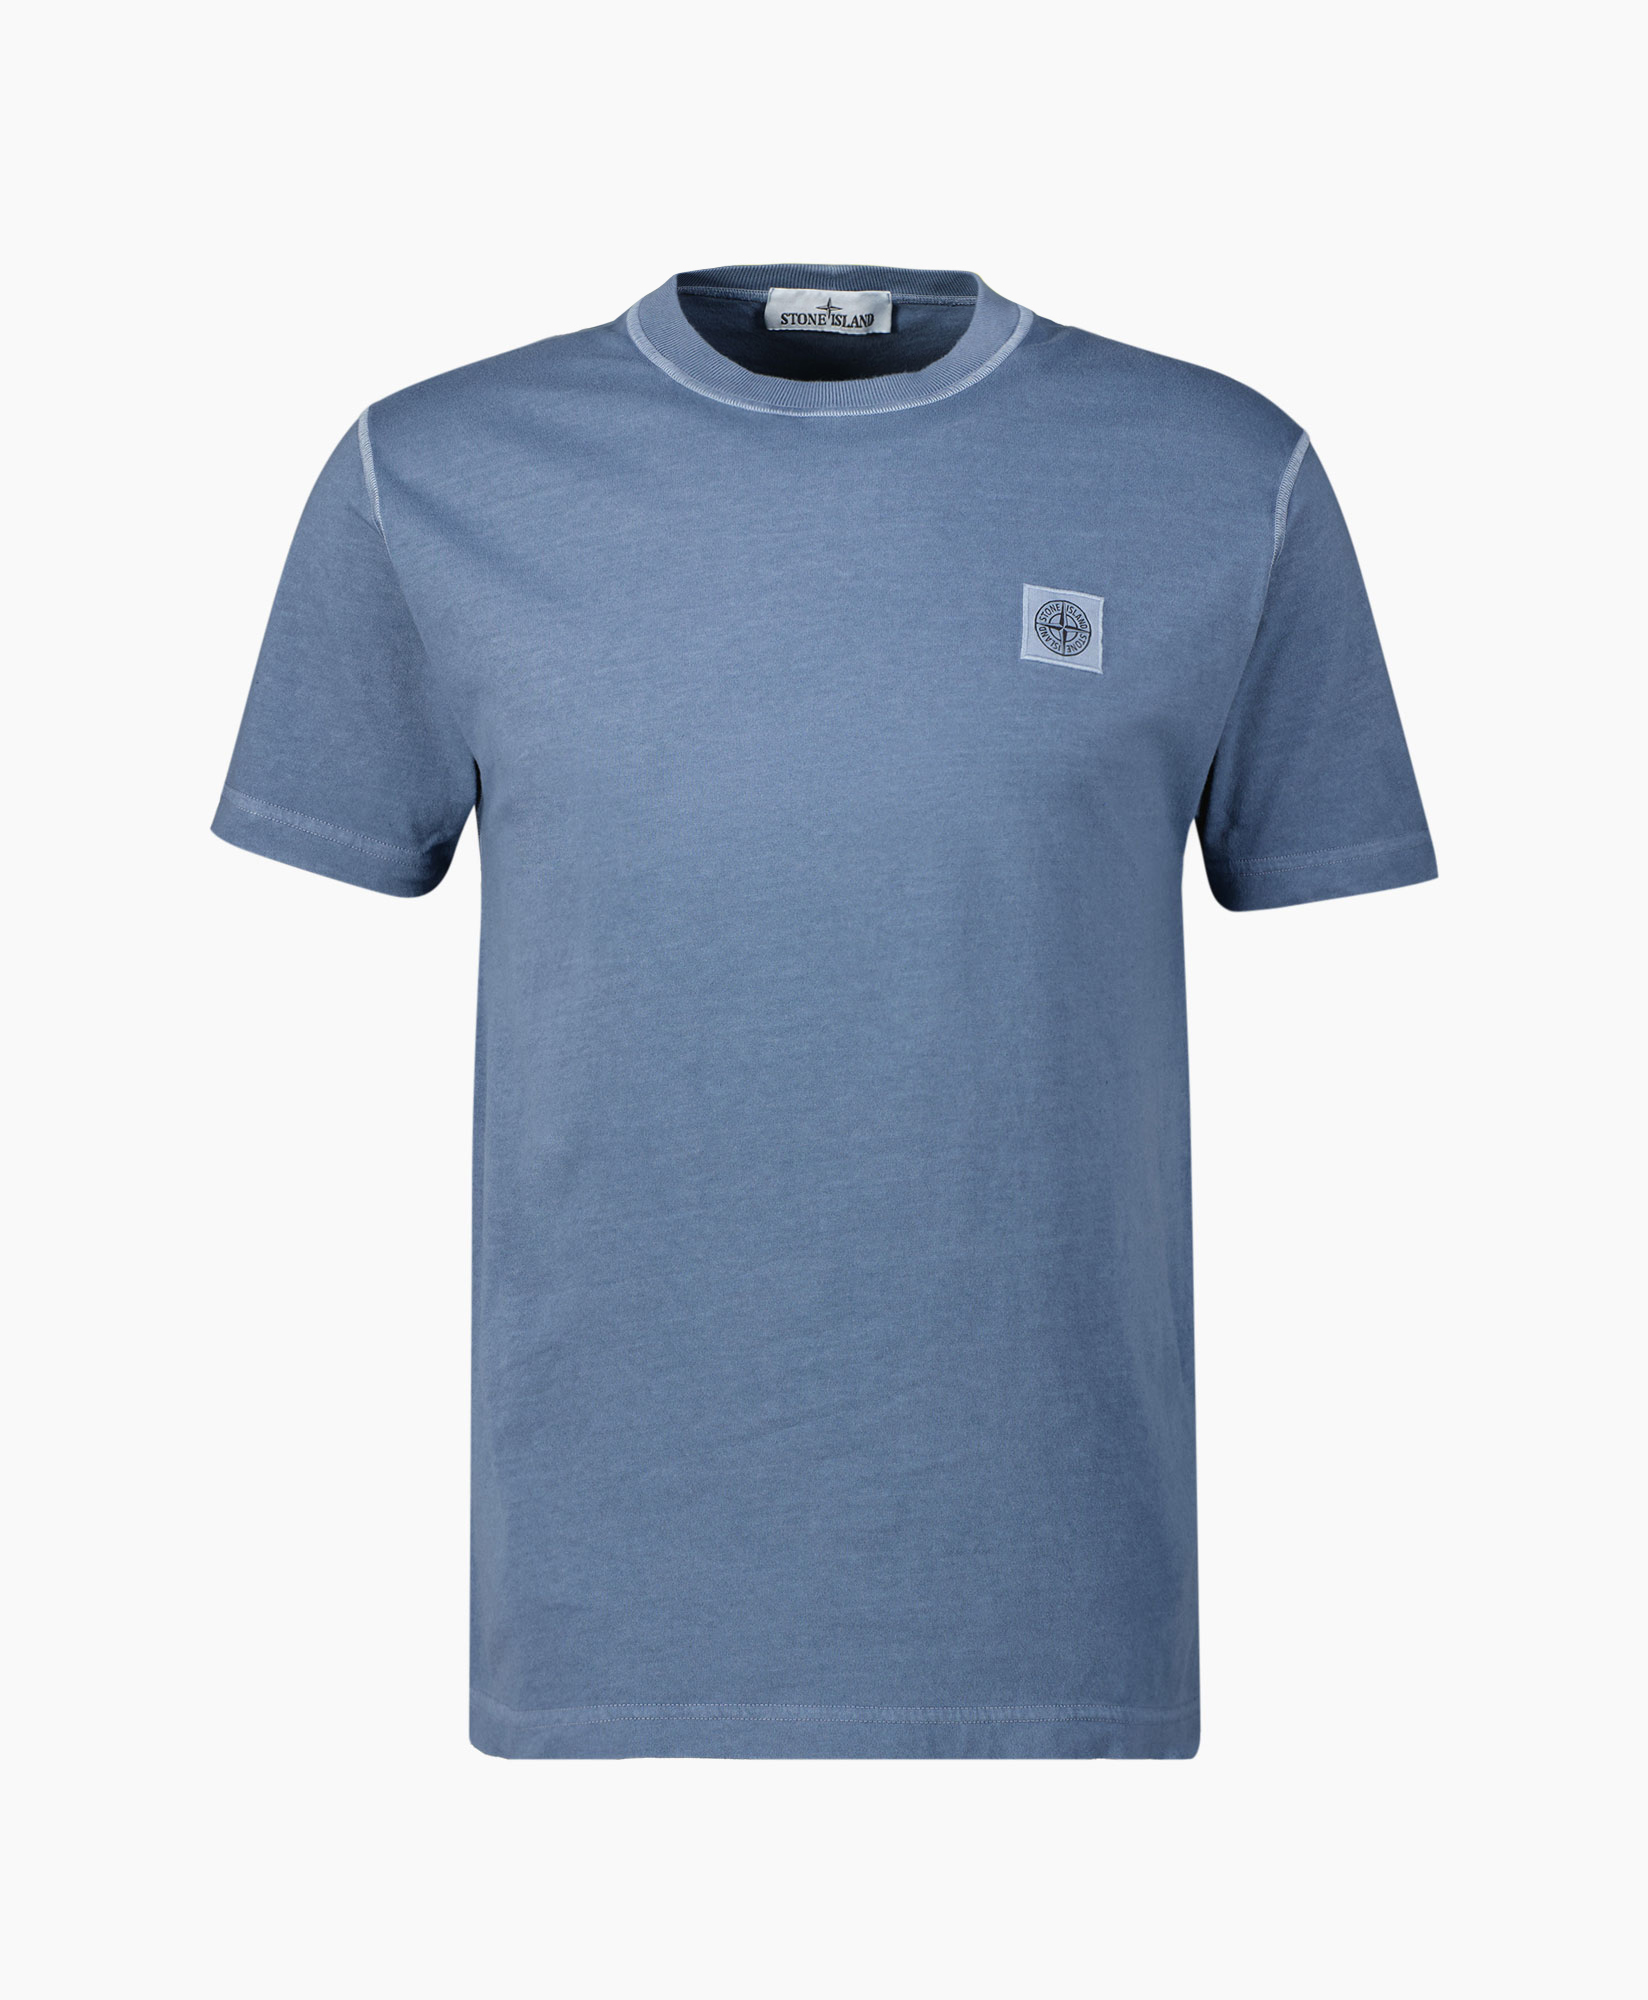 T-shirt 23757 Donker Blauw